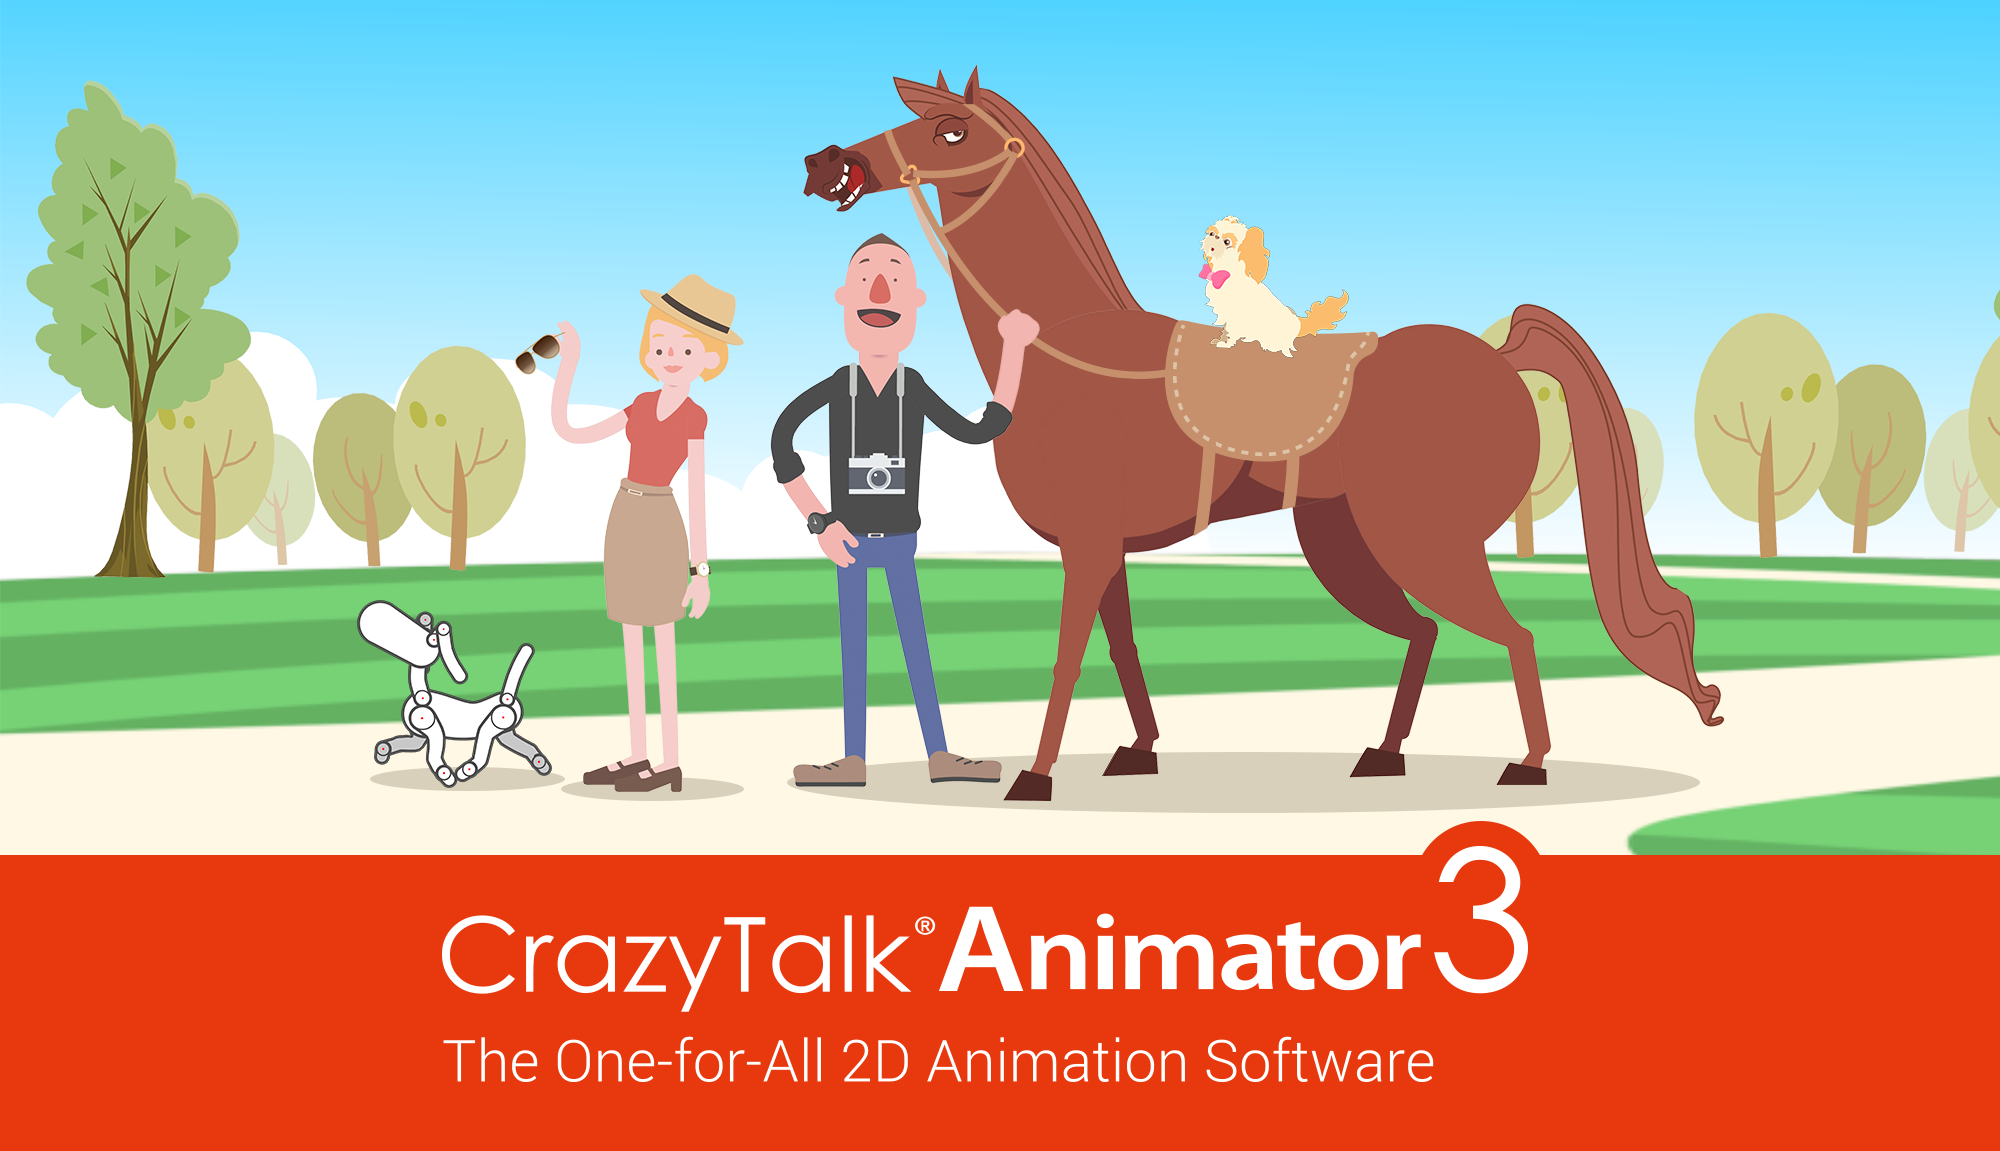 New CrazyTalk Animator 3 Automates 2D Character Creation & Cartoon  Animation - Reallusion Magazine